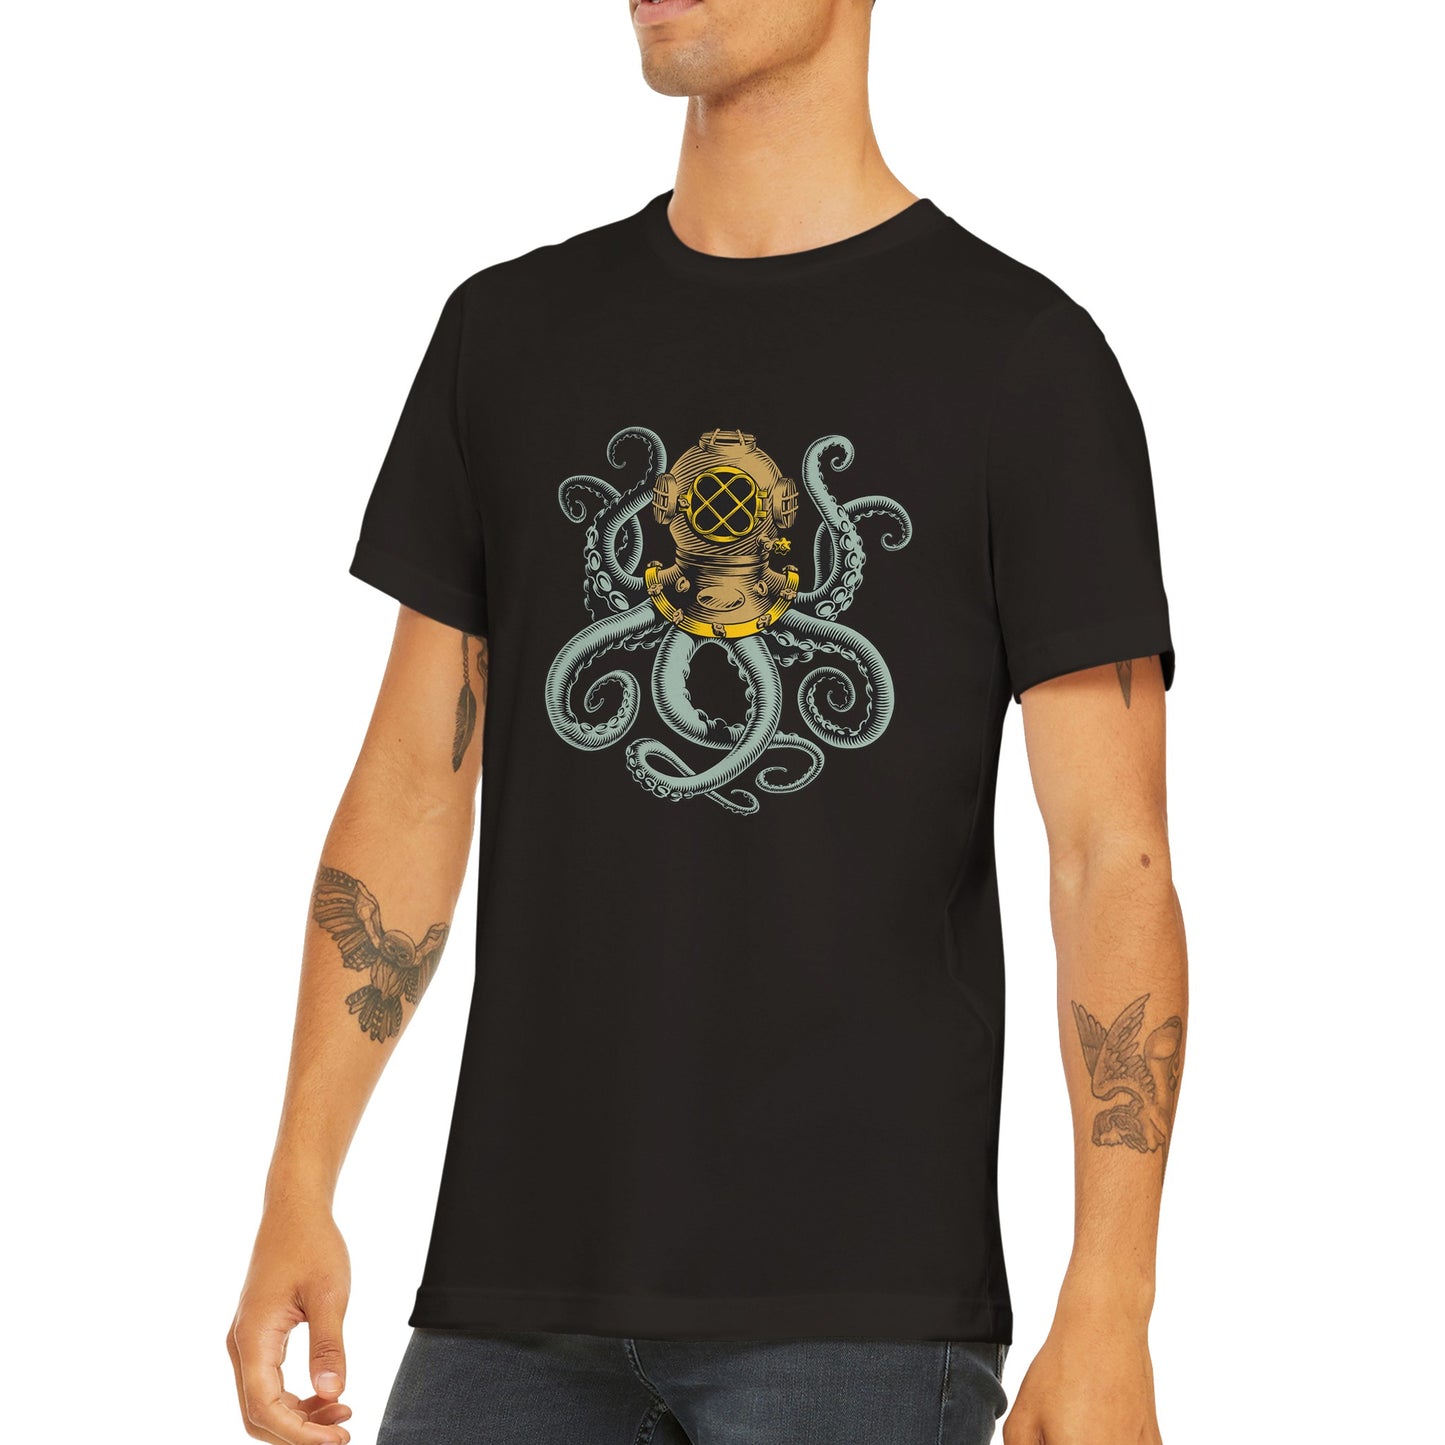 Octopus with diving helmet T-shirt